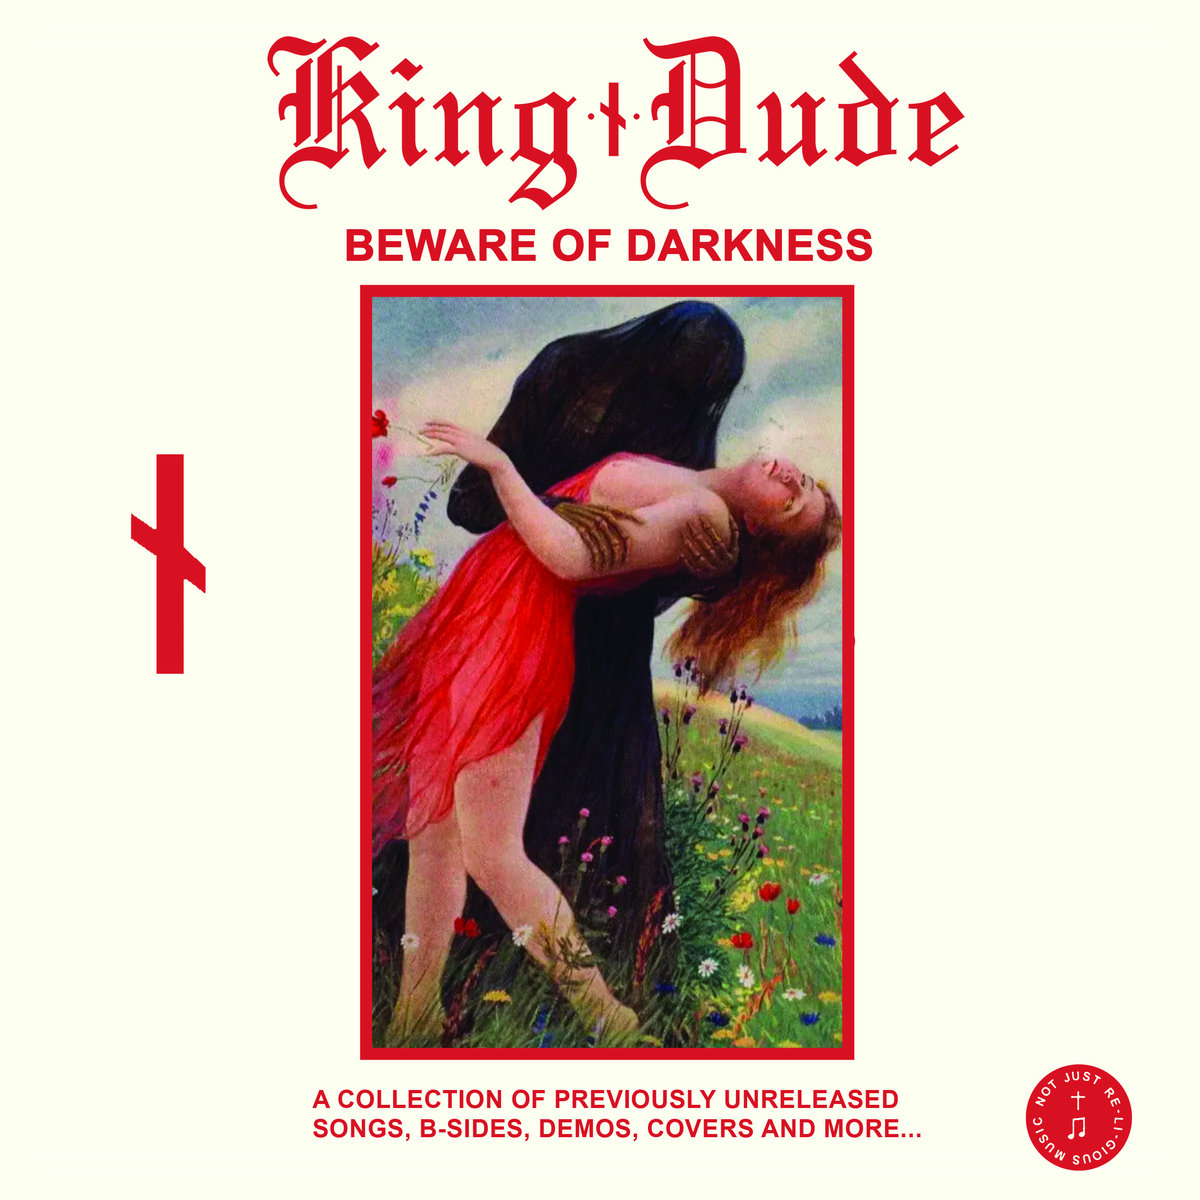 King Dude - Beware of Darkness